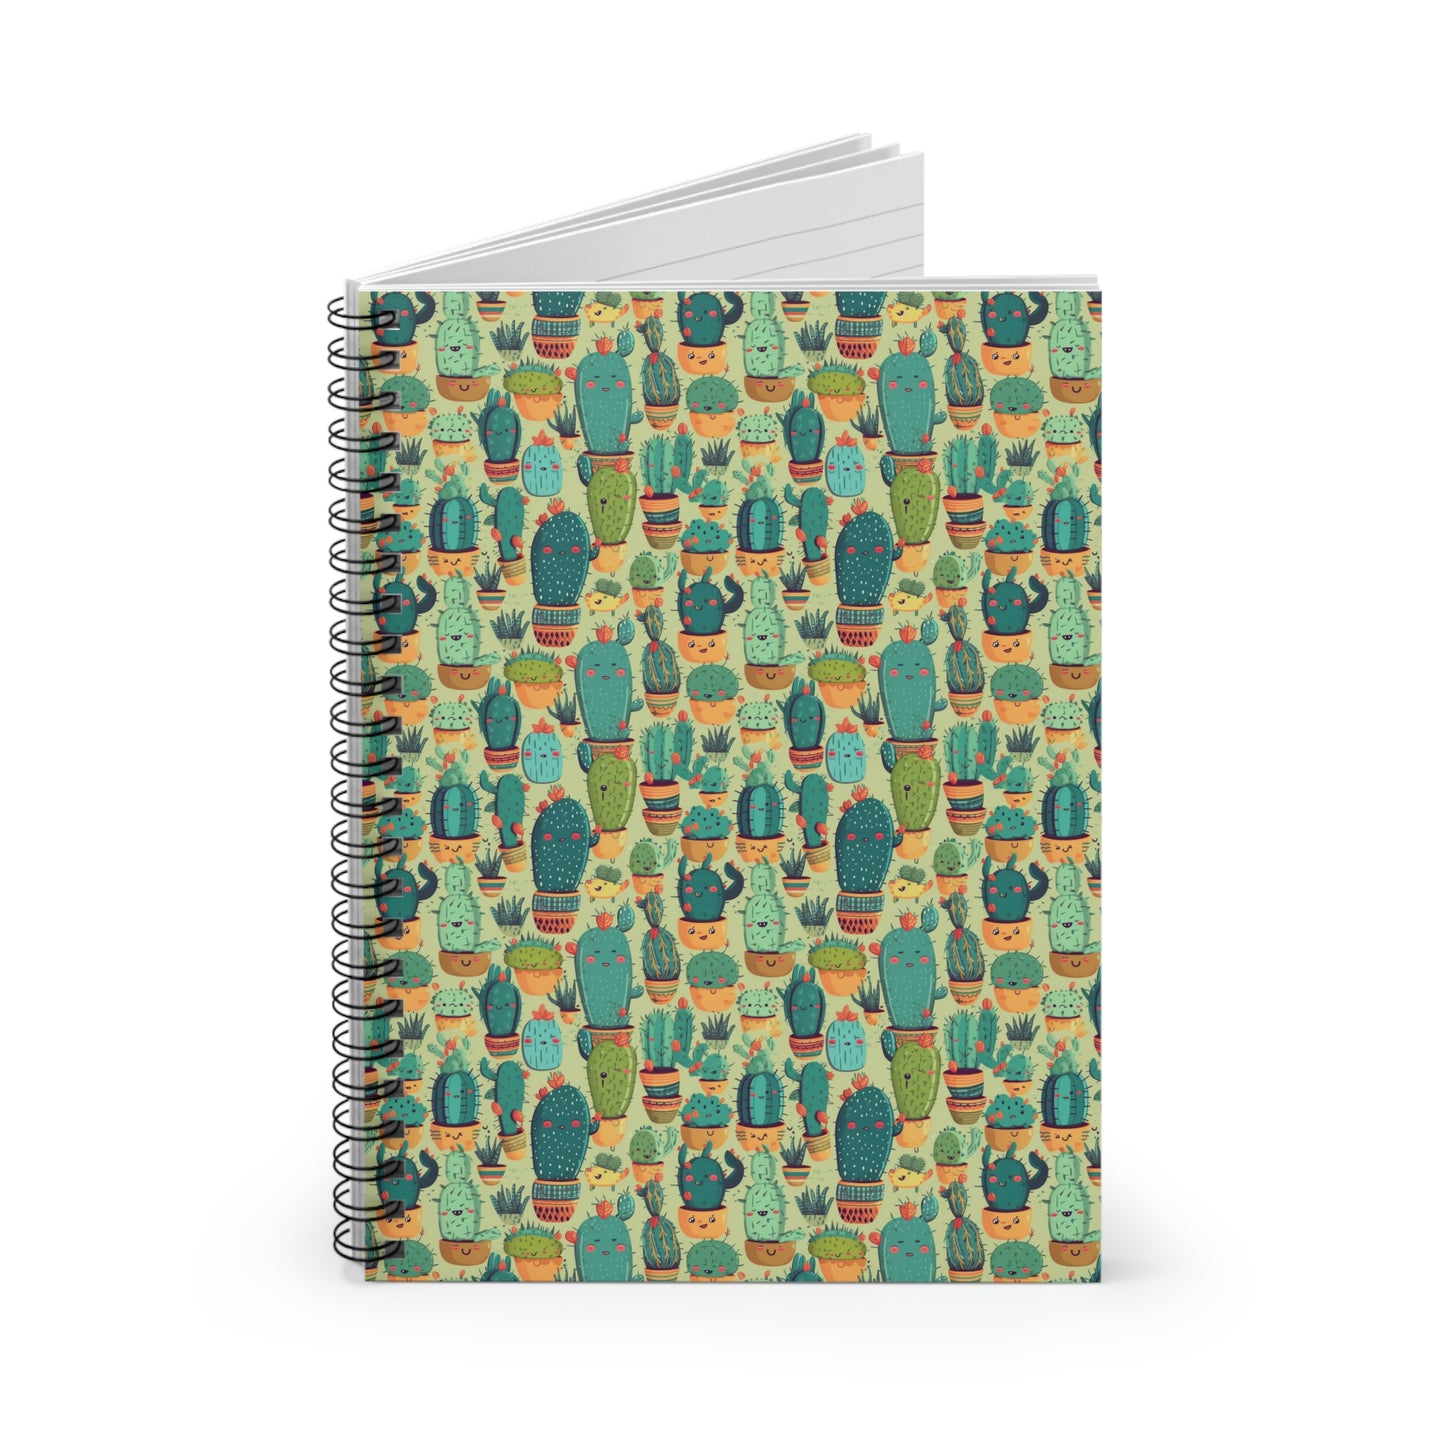 Cute Cactus, Spiral Notebook - Ruled Line